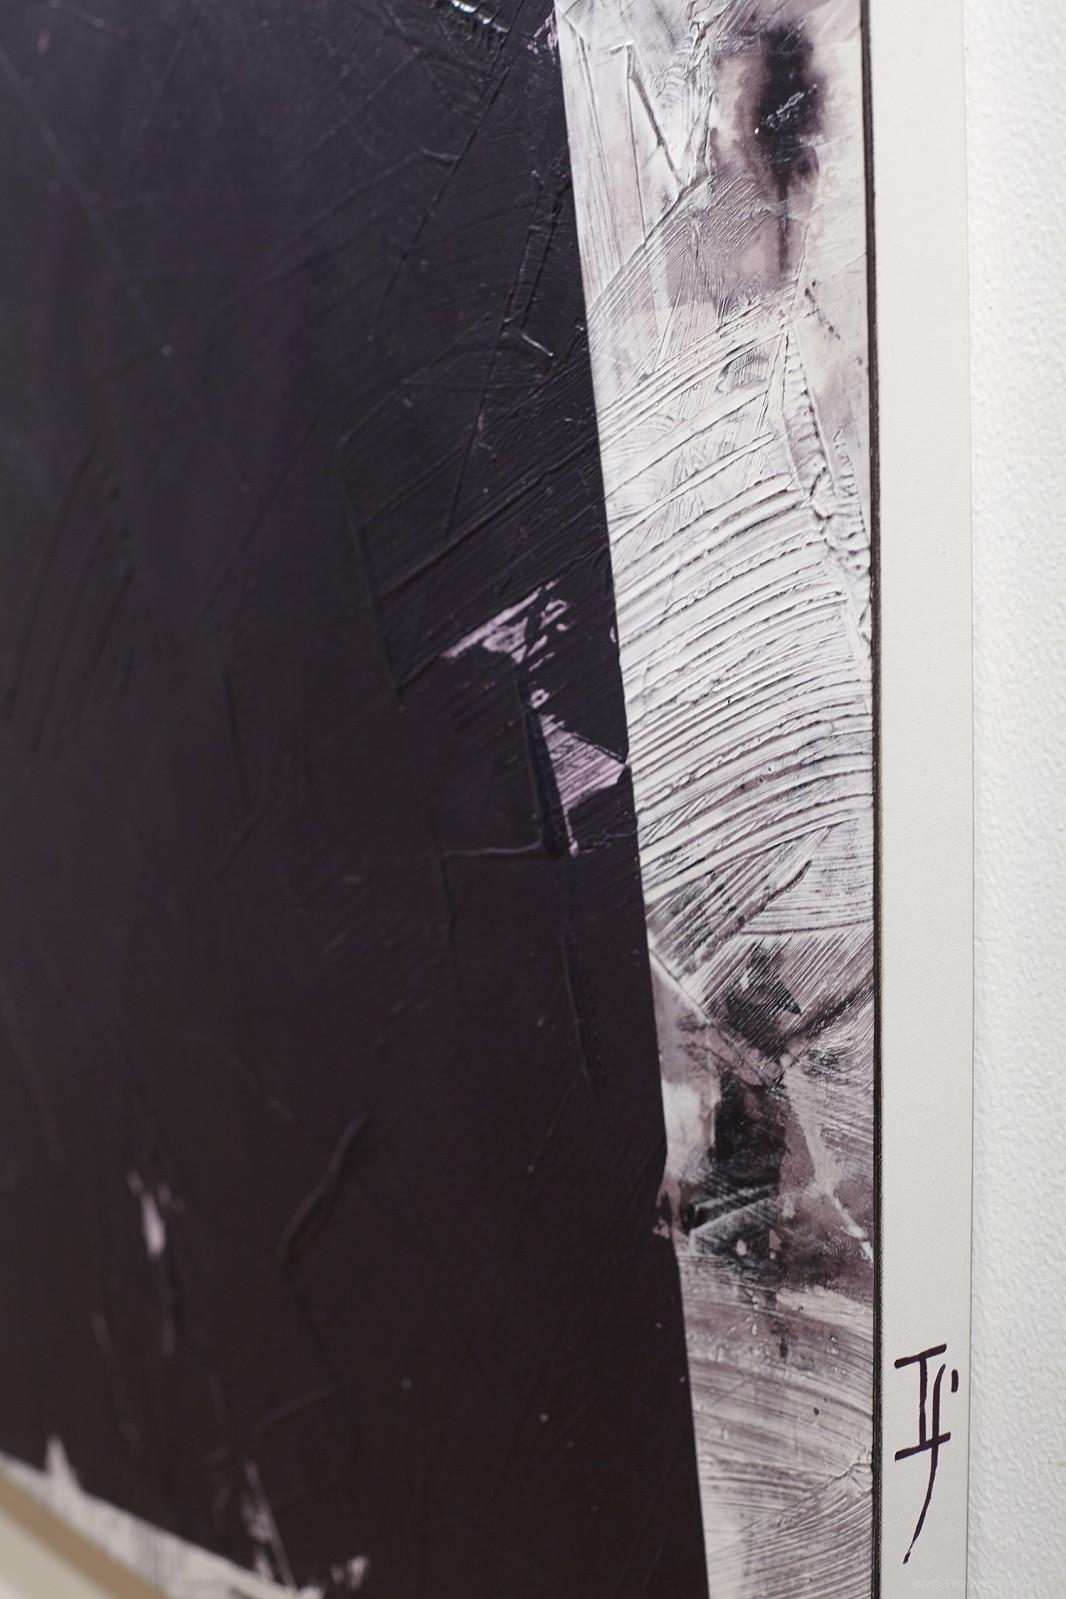 Double Black No.1 – kühne abstrakte Formen, Marmorstaub, Wachs, Acryl auf Leinwand – Painting von Ivo Stoyanov